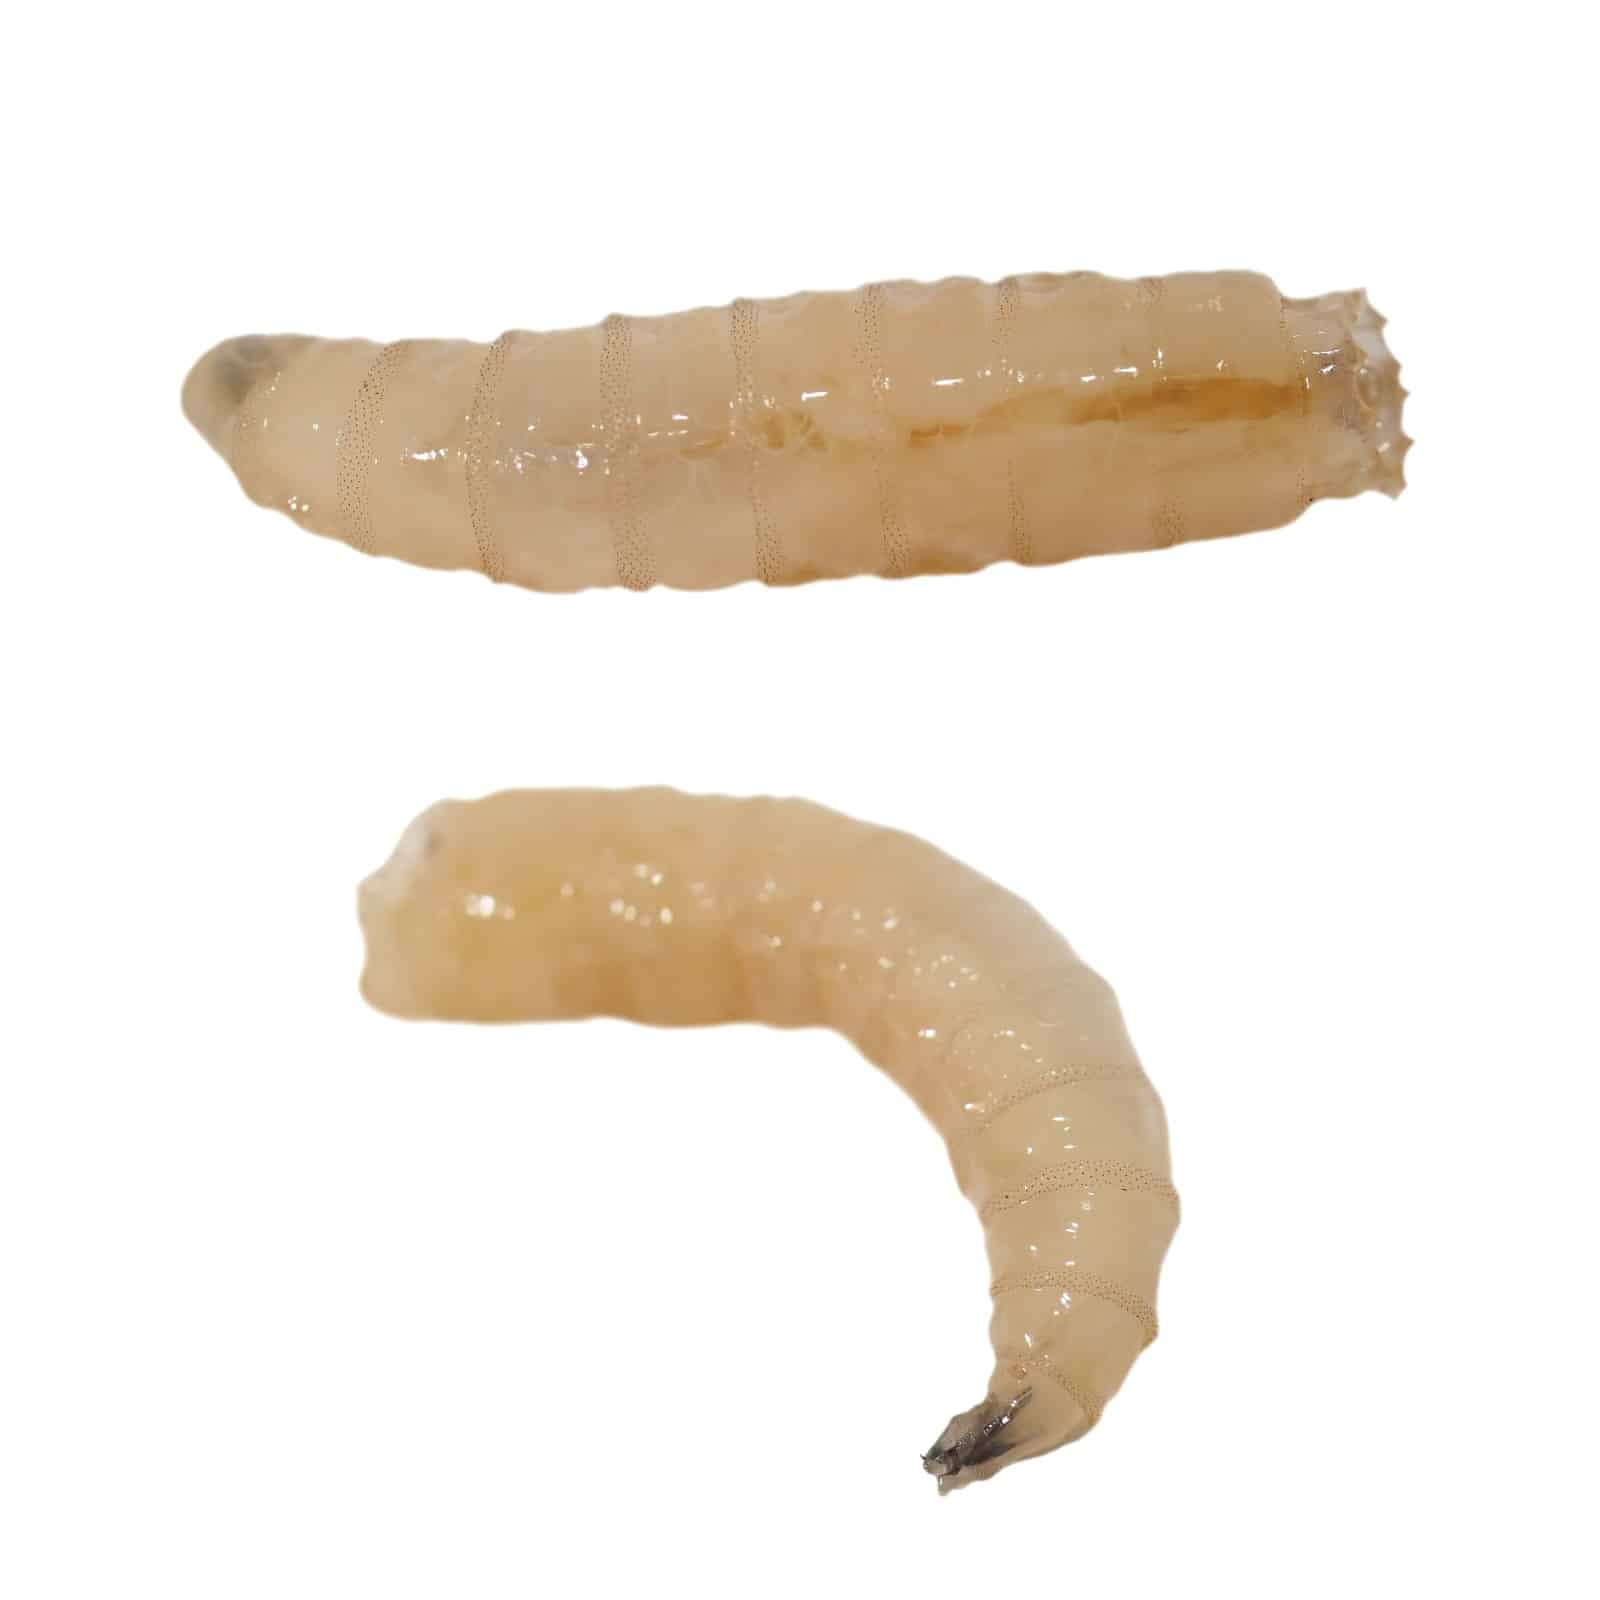 termite larvae vs maggots